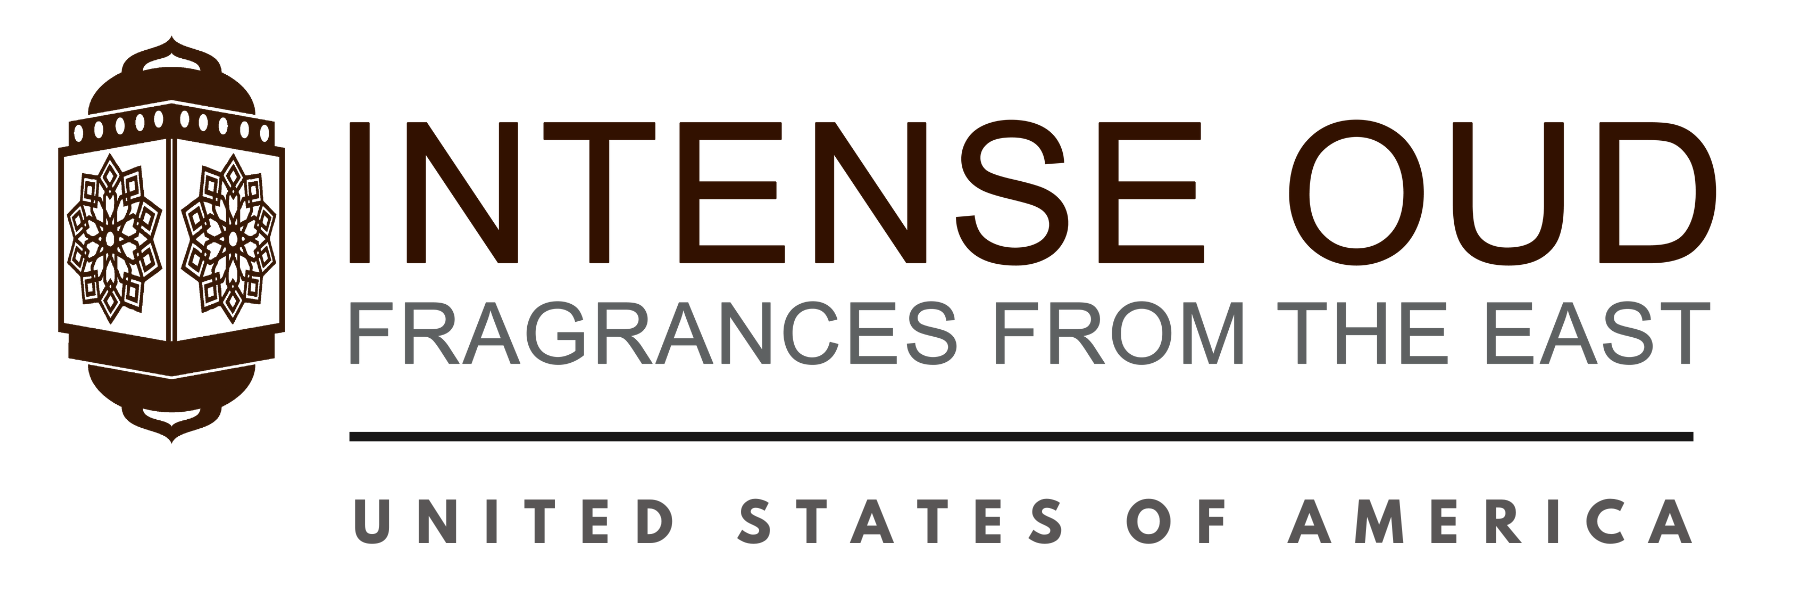 INTENSE OUD  logo